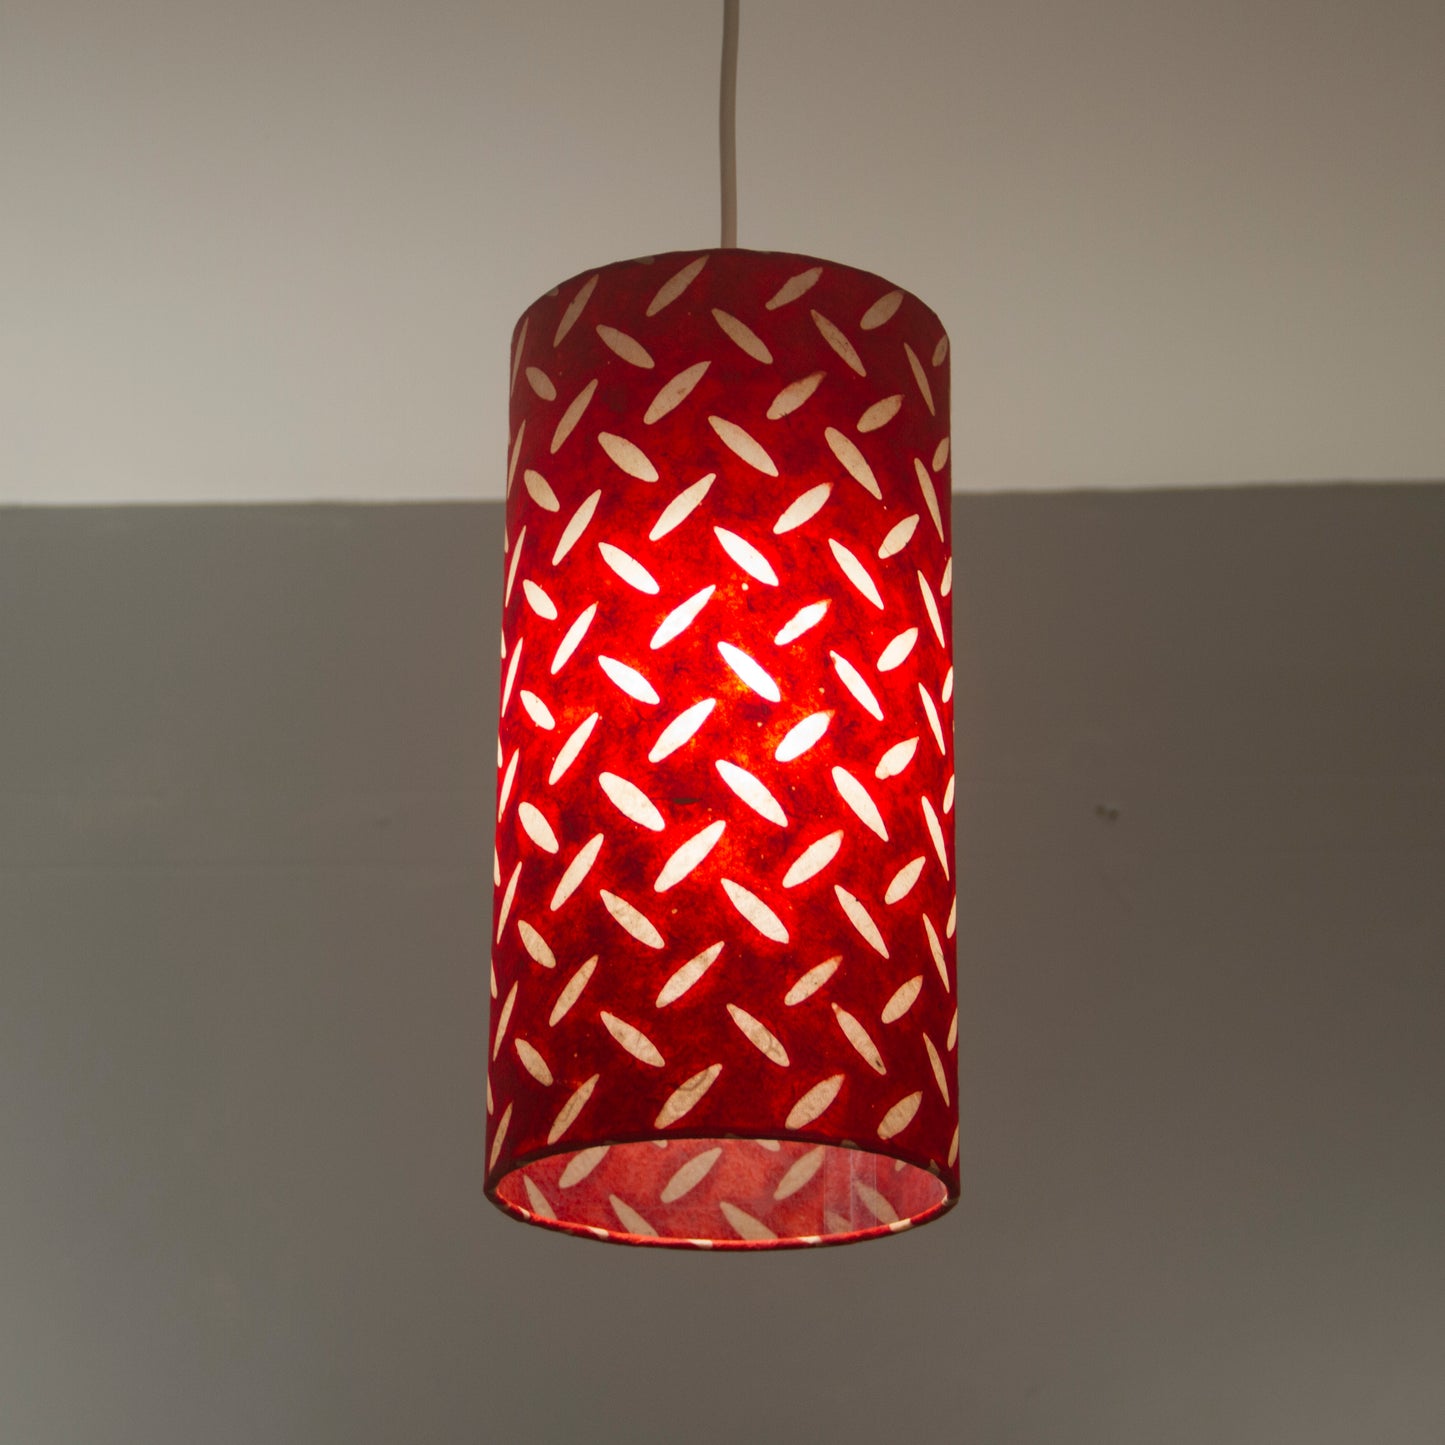 3 Tier Lamp Shade - P90 ~ Batik Tread Plate Red, 40cm x 20cm, 30cm x 17.5cm & 20cm x 15cm